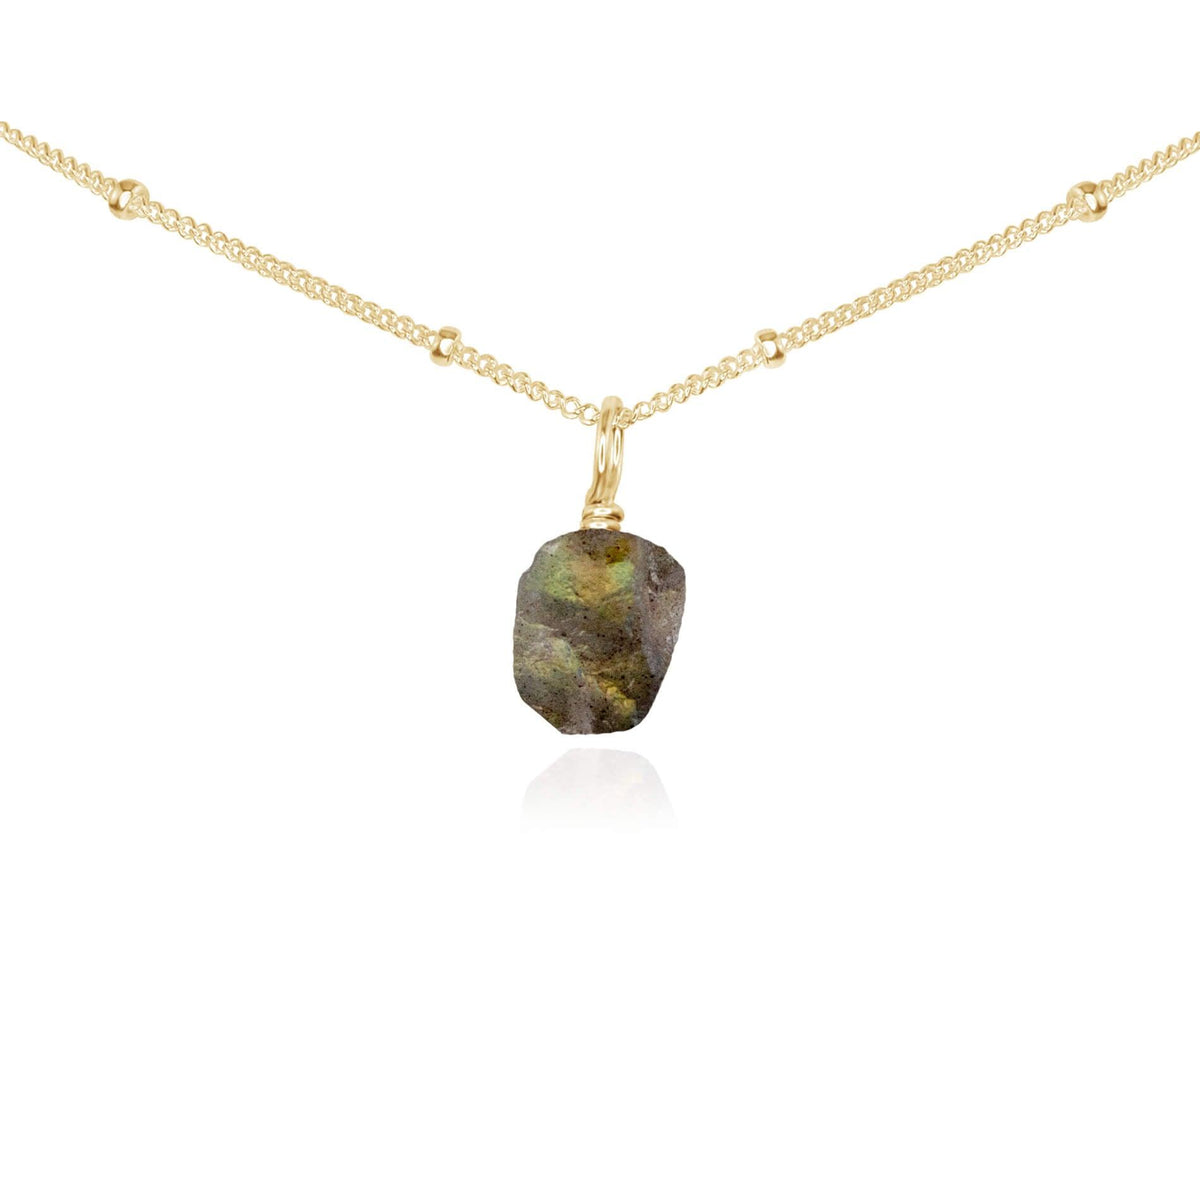 Tiny Rough Labradorite Gemstone Pendant Choker - Tiny Rough Labradorite Gemstone Pendant Choker - 14k Gold Fill / Satellite - Luna Tide Handmade Crystal Jewellery